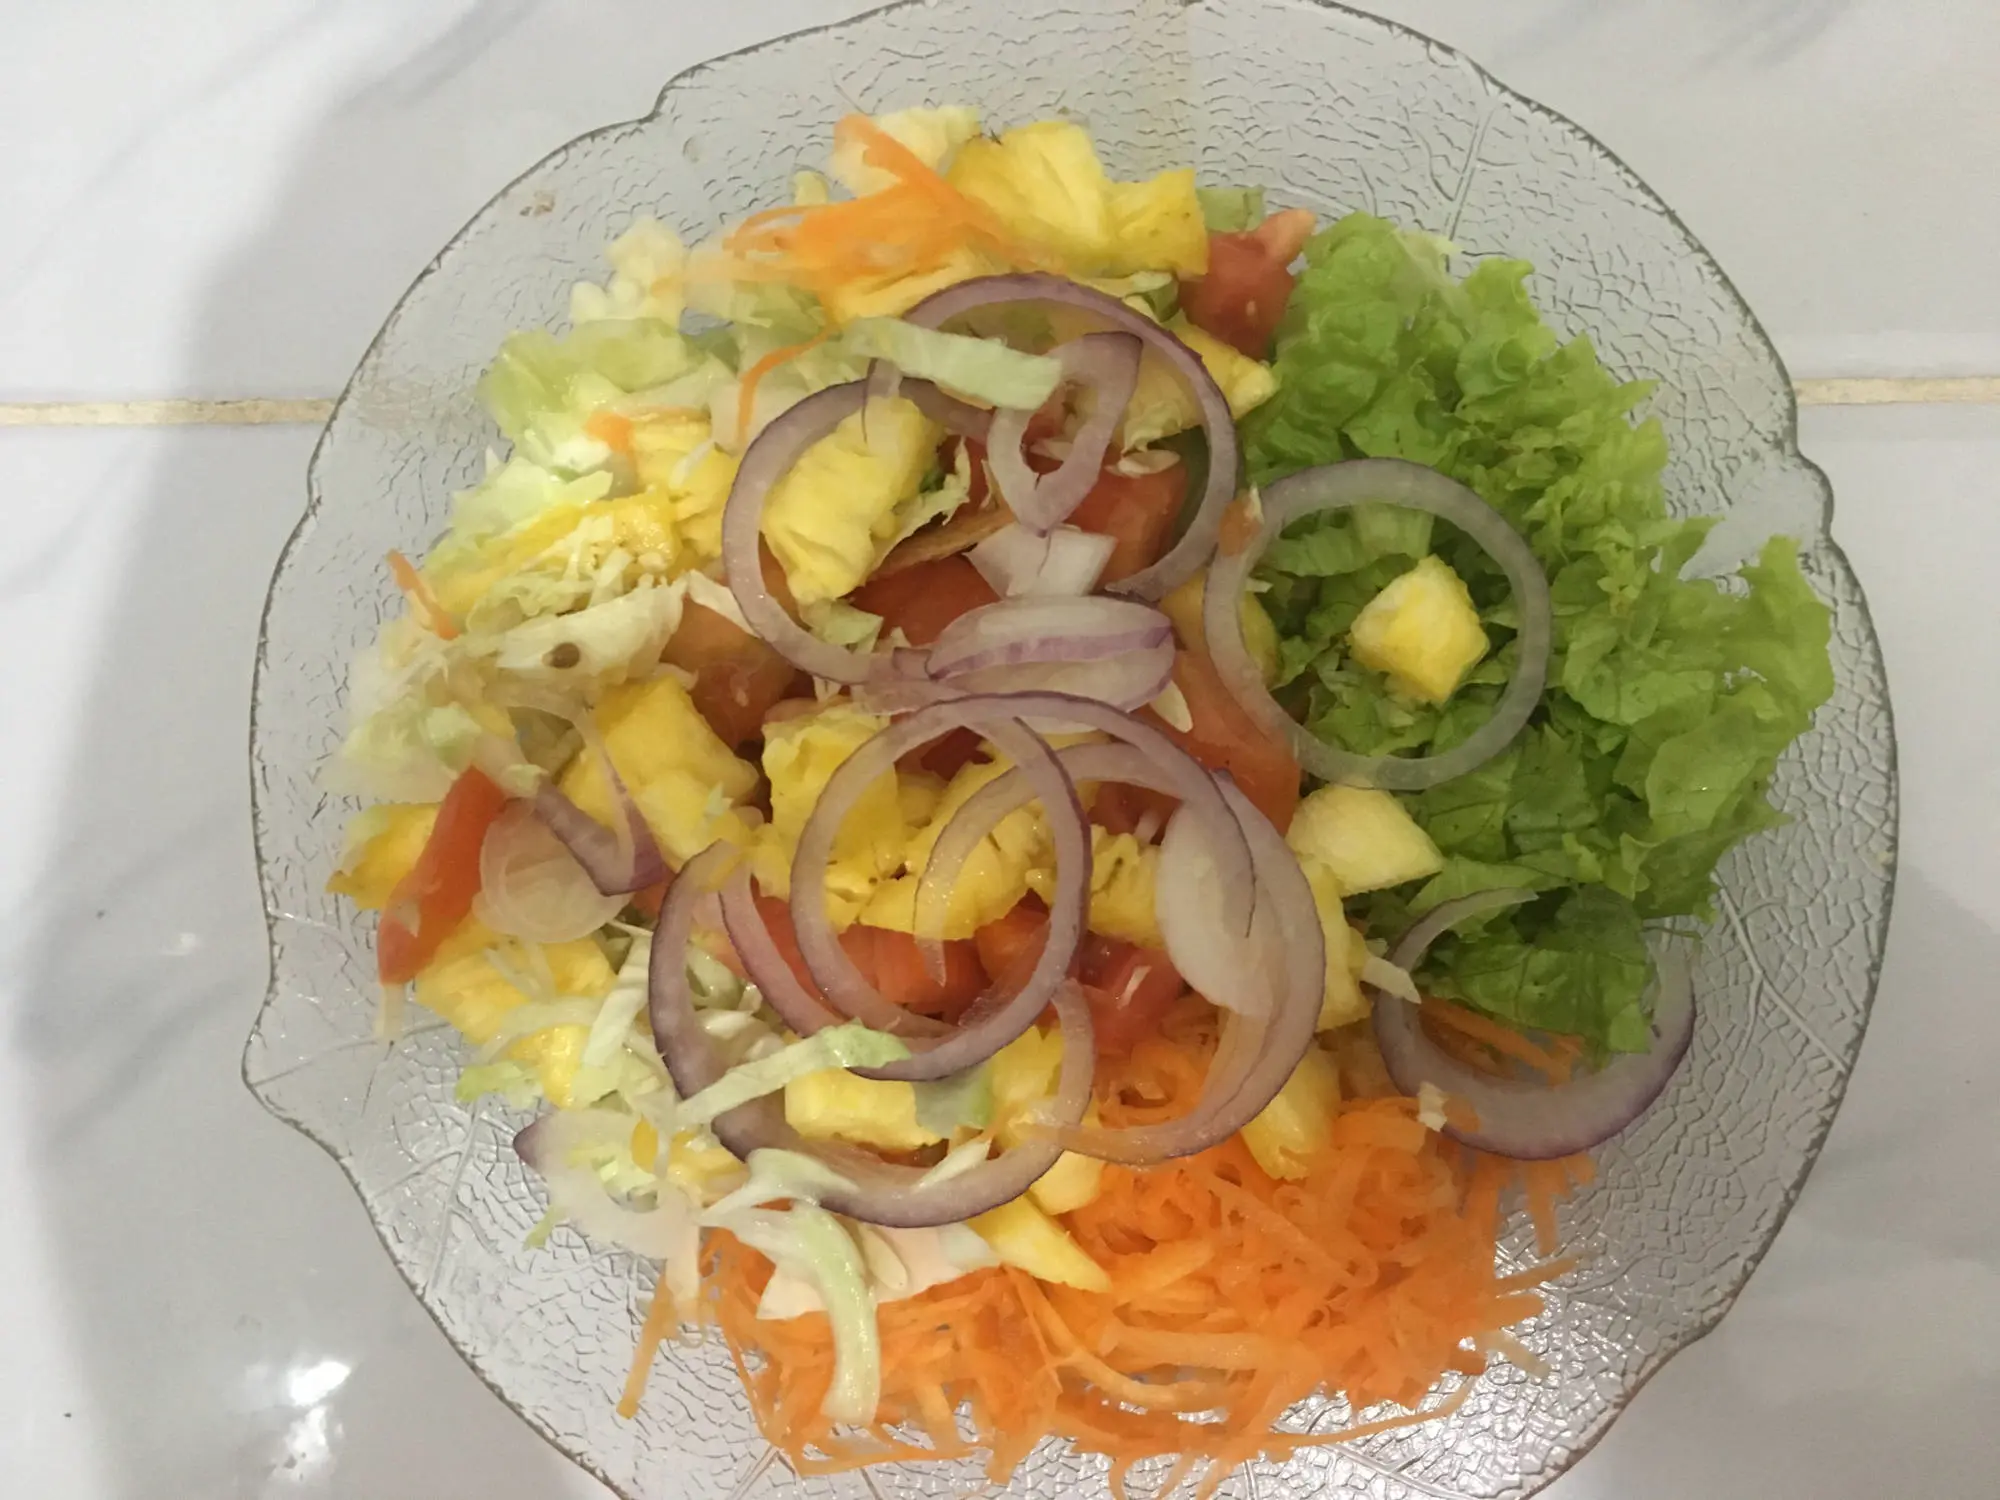 Small Salad from Cocobello Restaurant